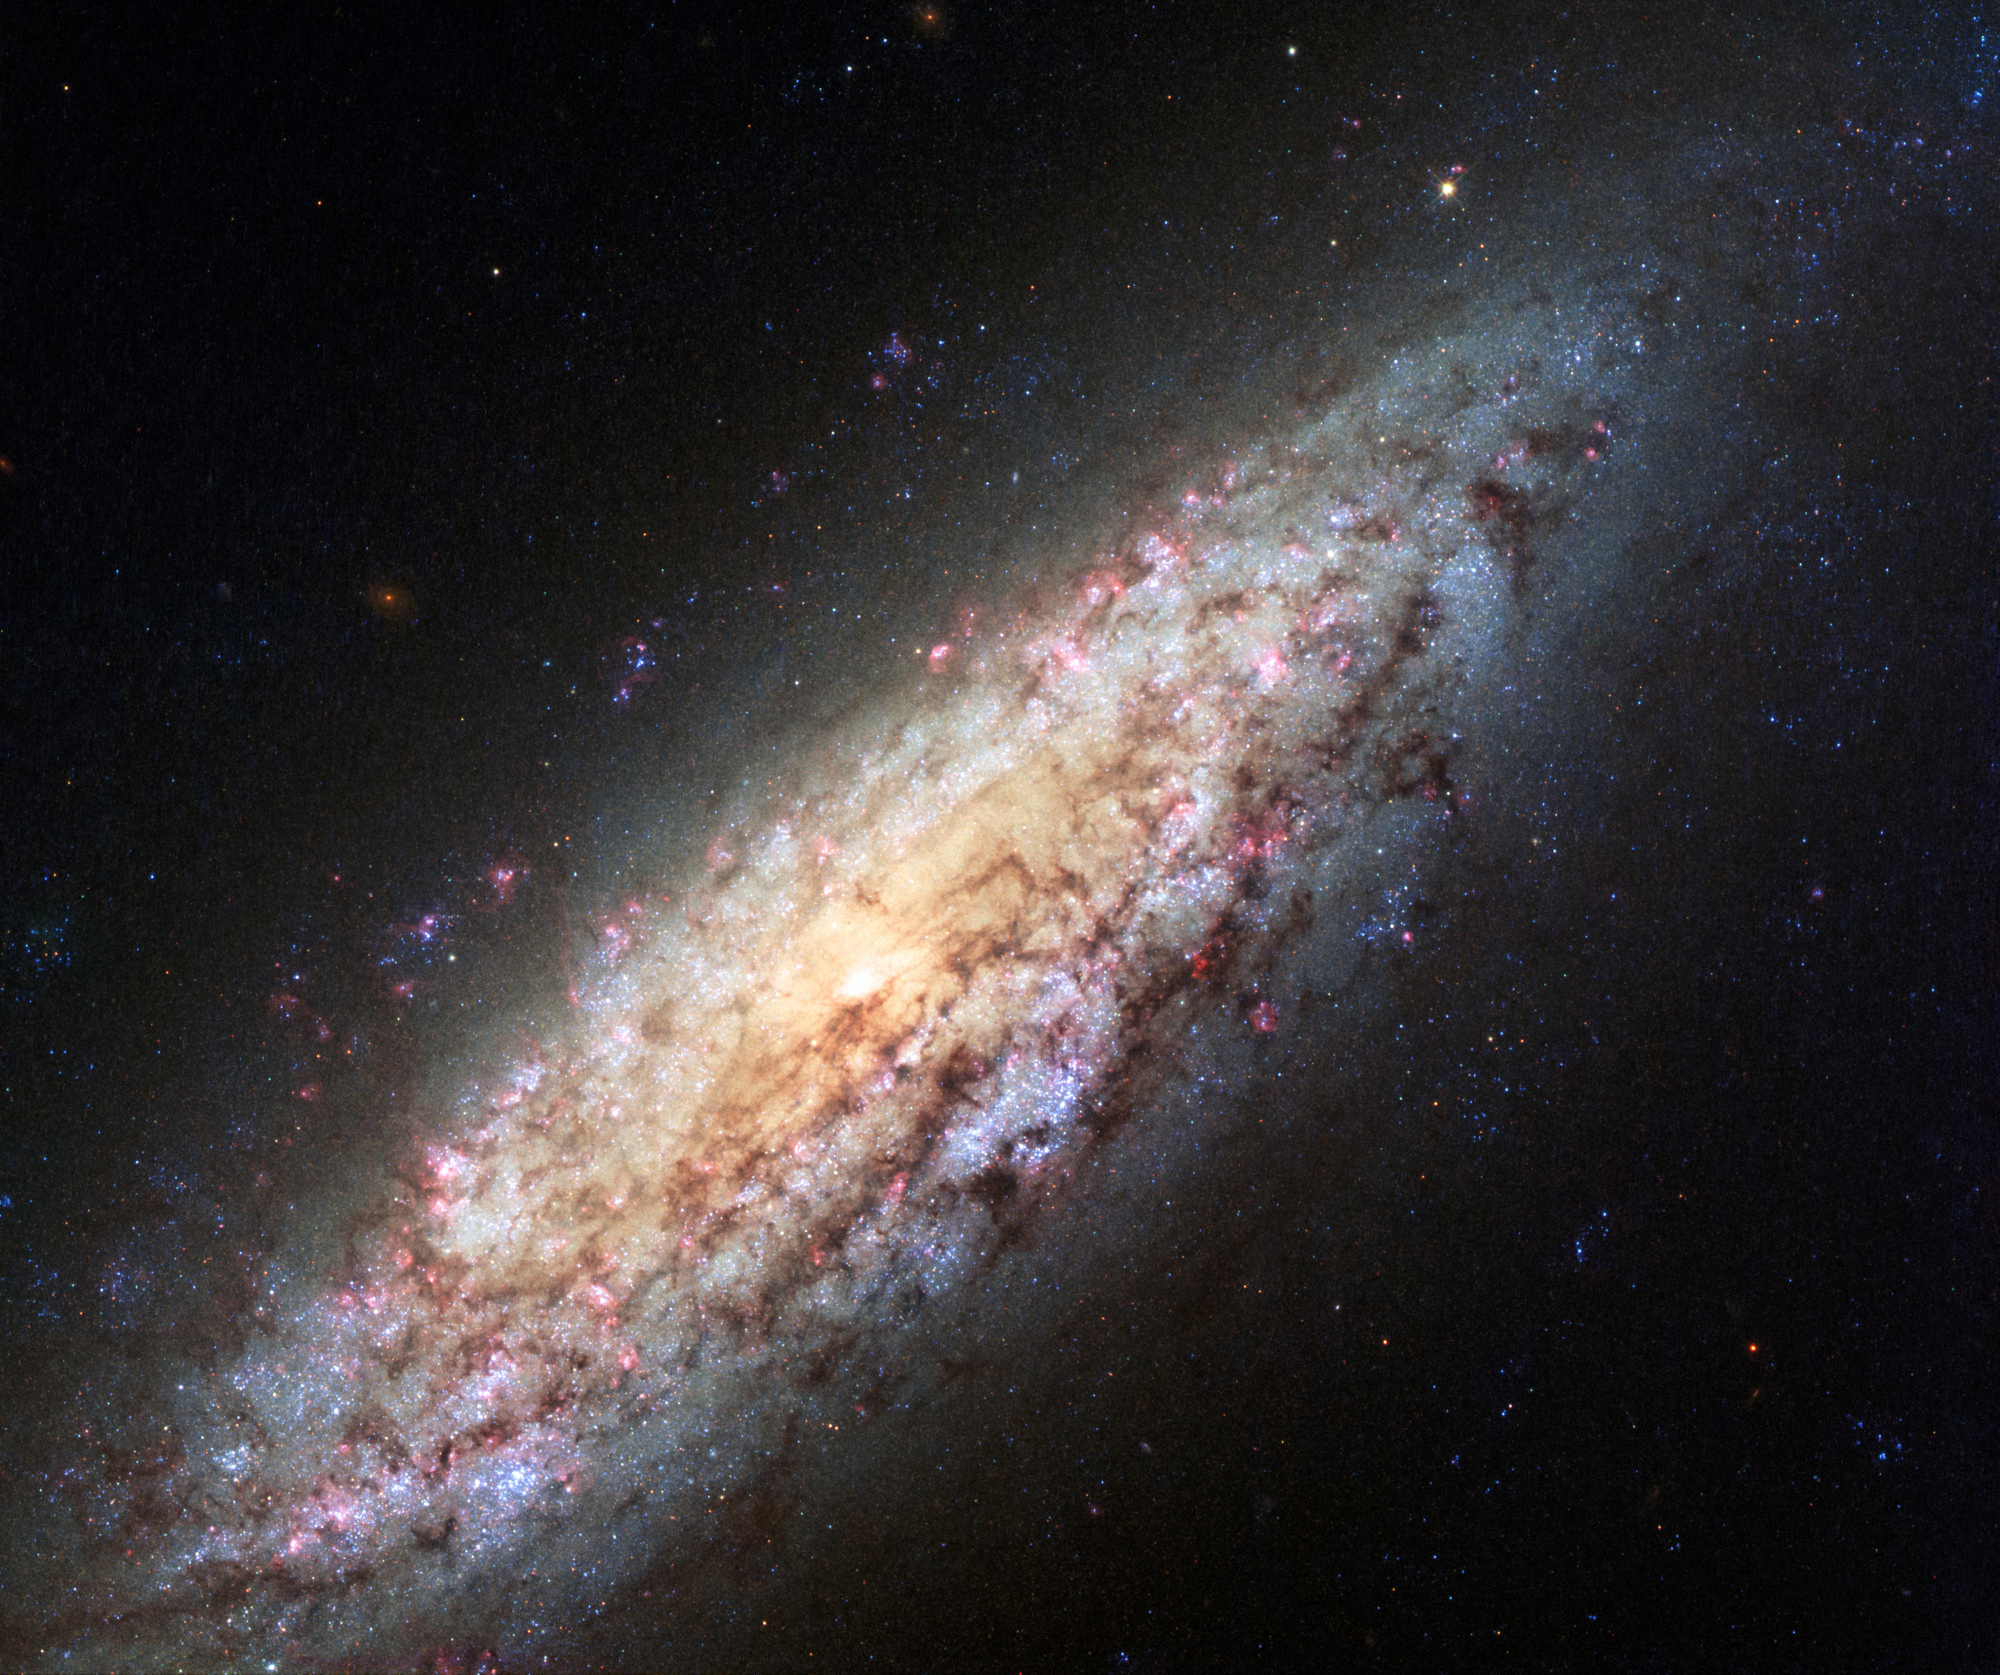 NGC_6503_Hubble.thumb.jpg.cdecb7a2fa0a10dd4a71c7239de51678.jpg